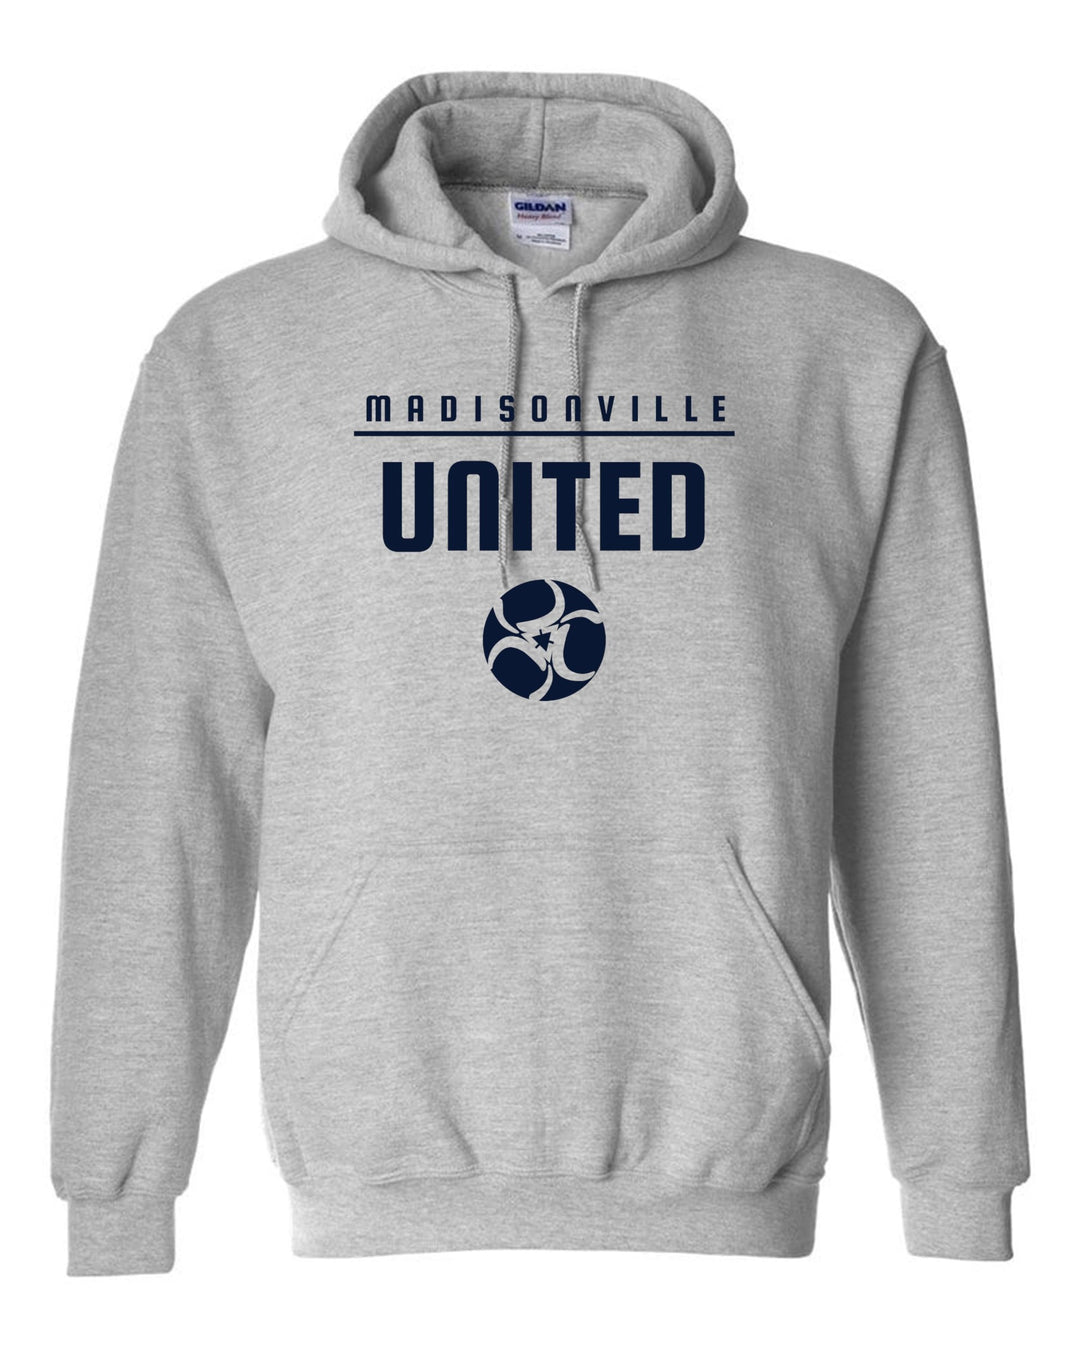 Madidsonville United Hoody - Black, Grey, Navy or White Madisonville United Spiritwear   - Third Coast Soccer